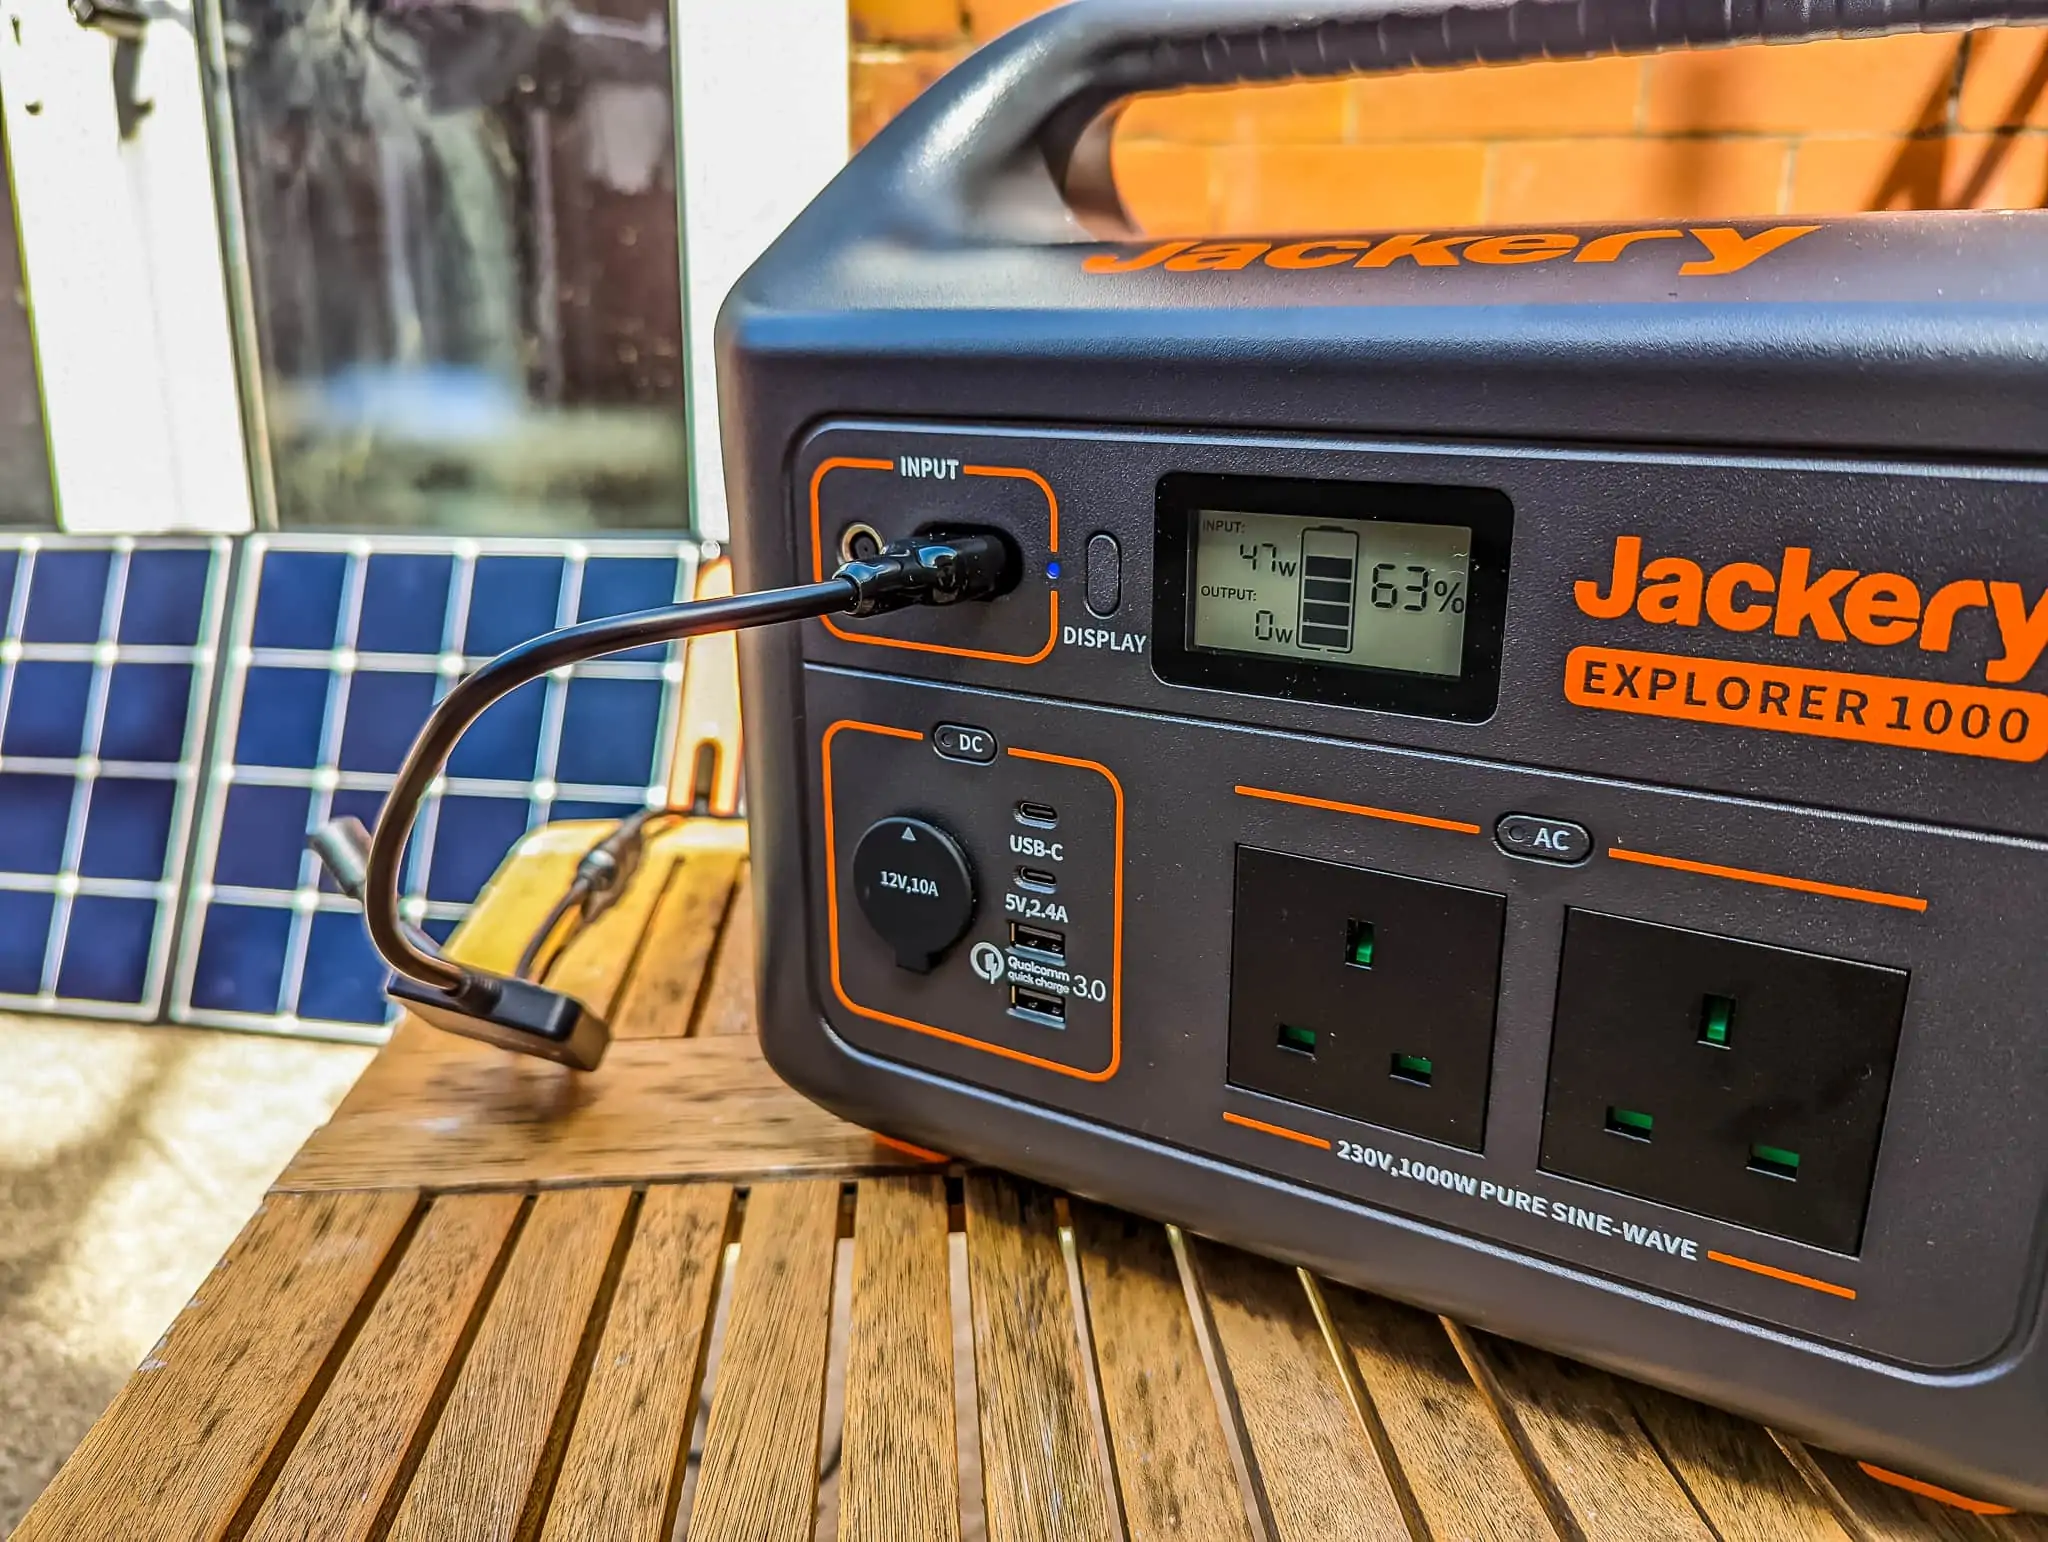 Jackery Solar Generator 1000 Review: Explorer 1000 Portable Power Station + 2x SolarSaga 100W Solar Panels